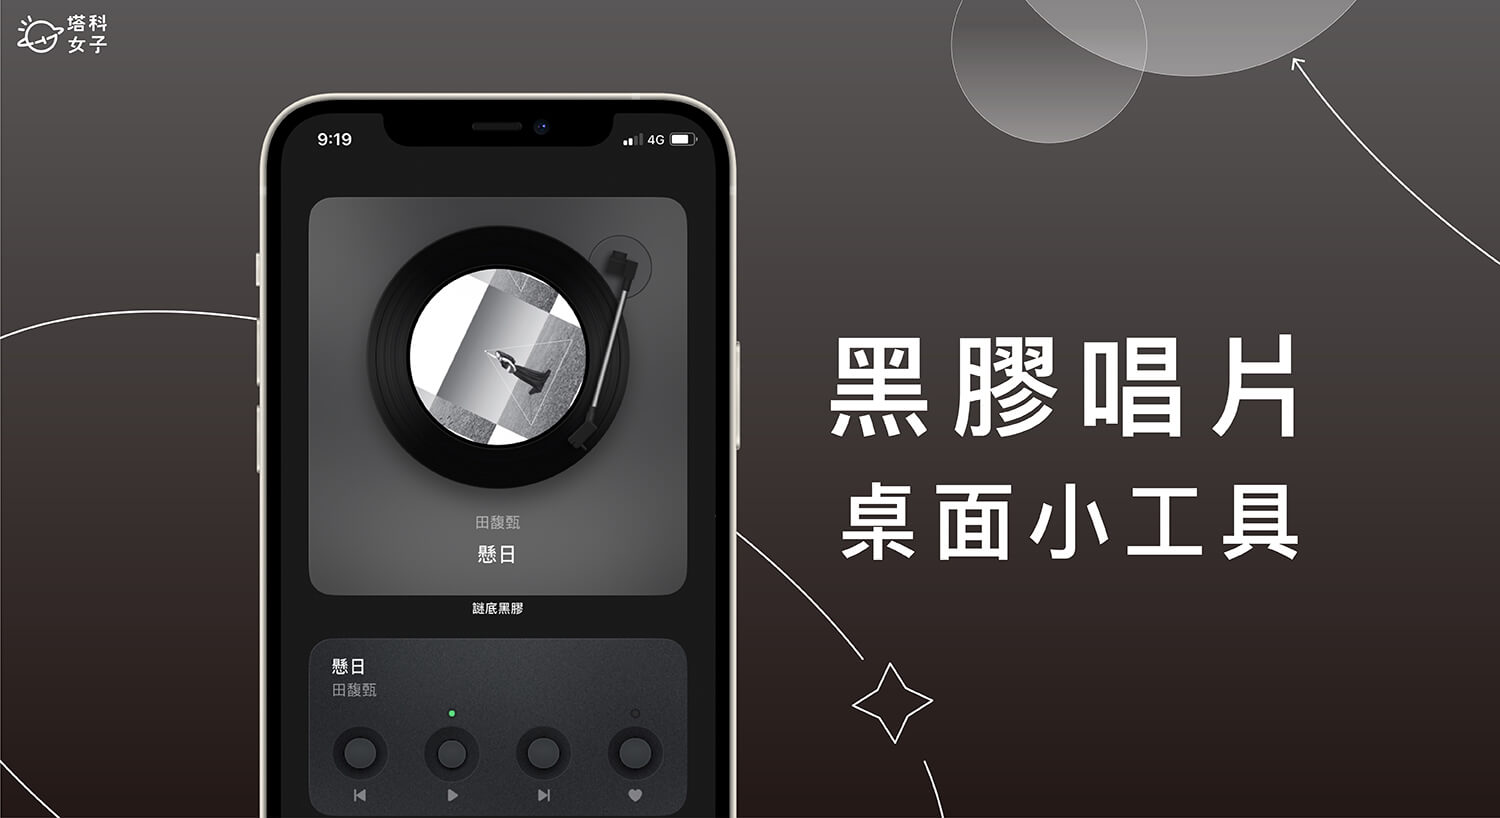 iPhone 桌面黑膠唱片小工具《謎底黑膠》支援 Apple Music 及 Spotify